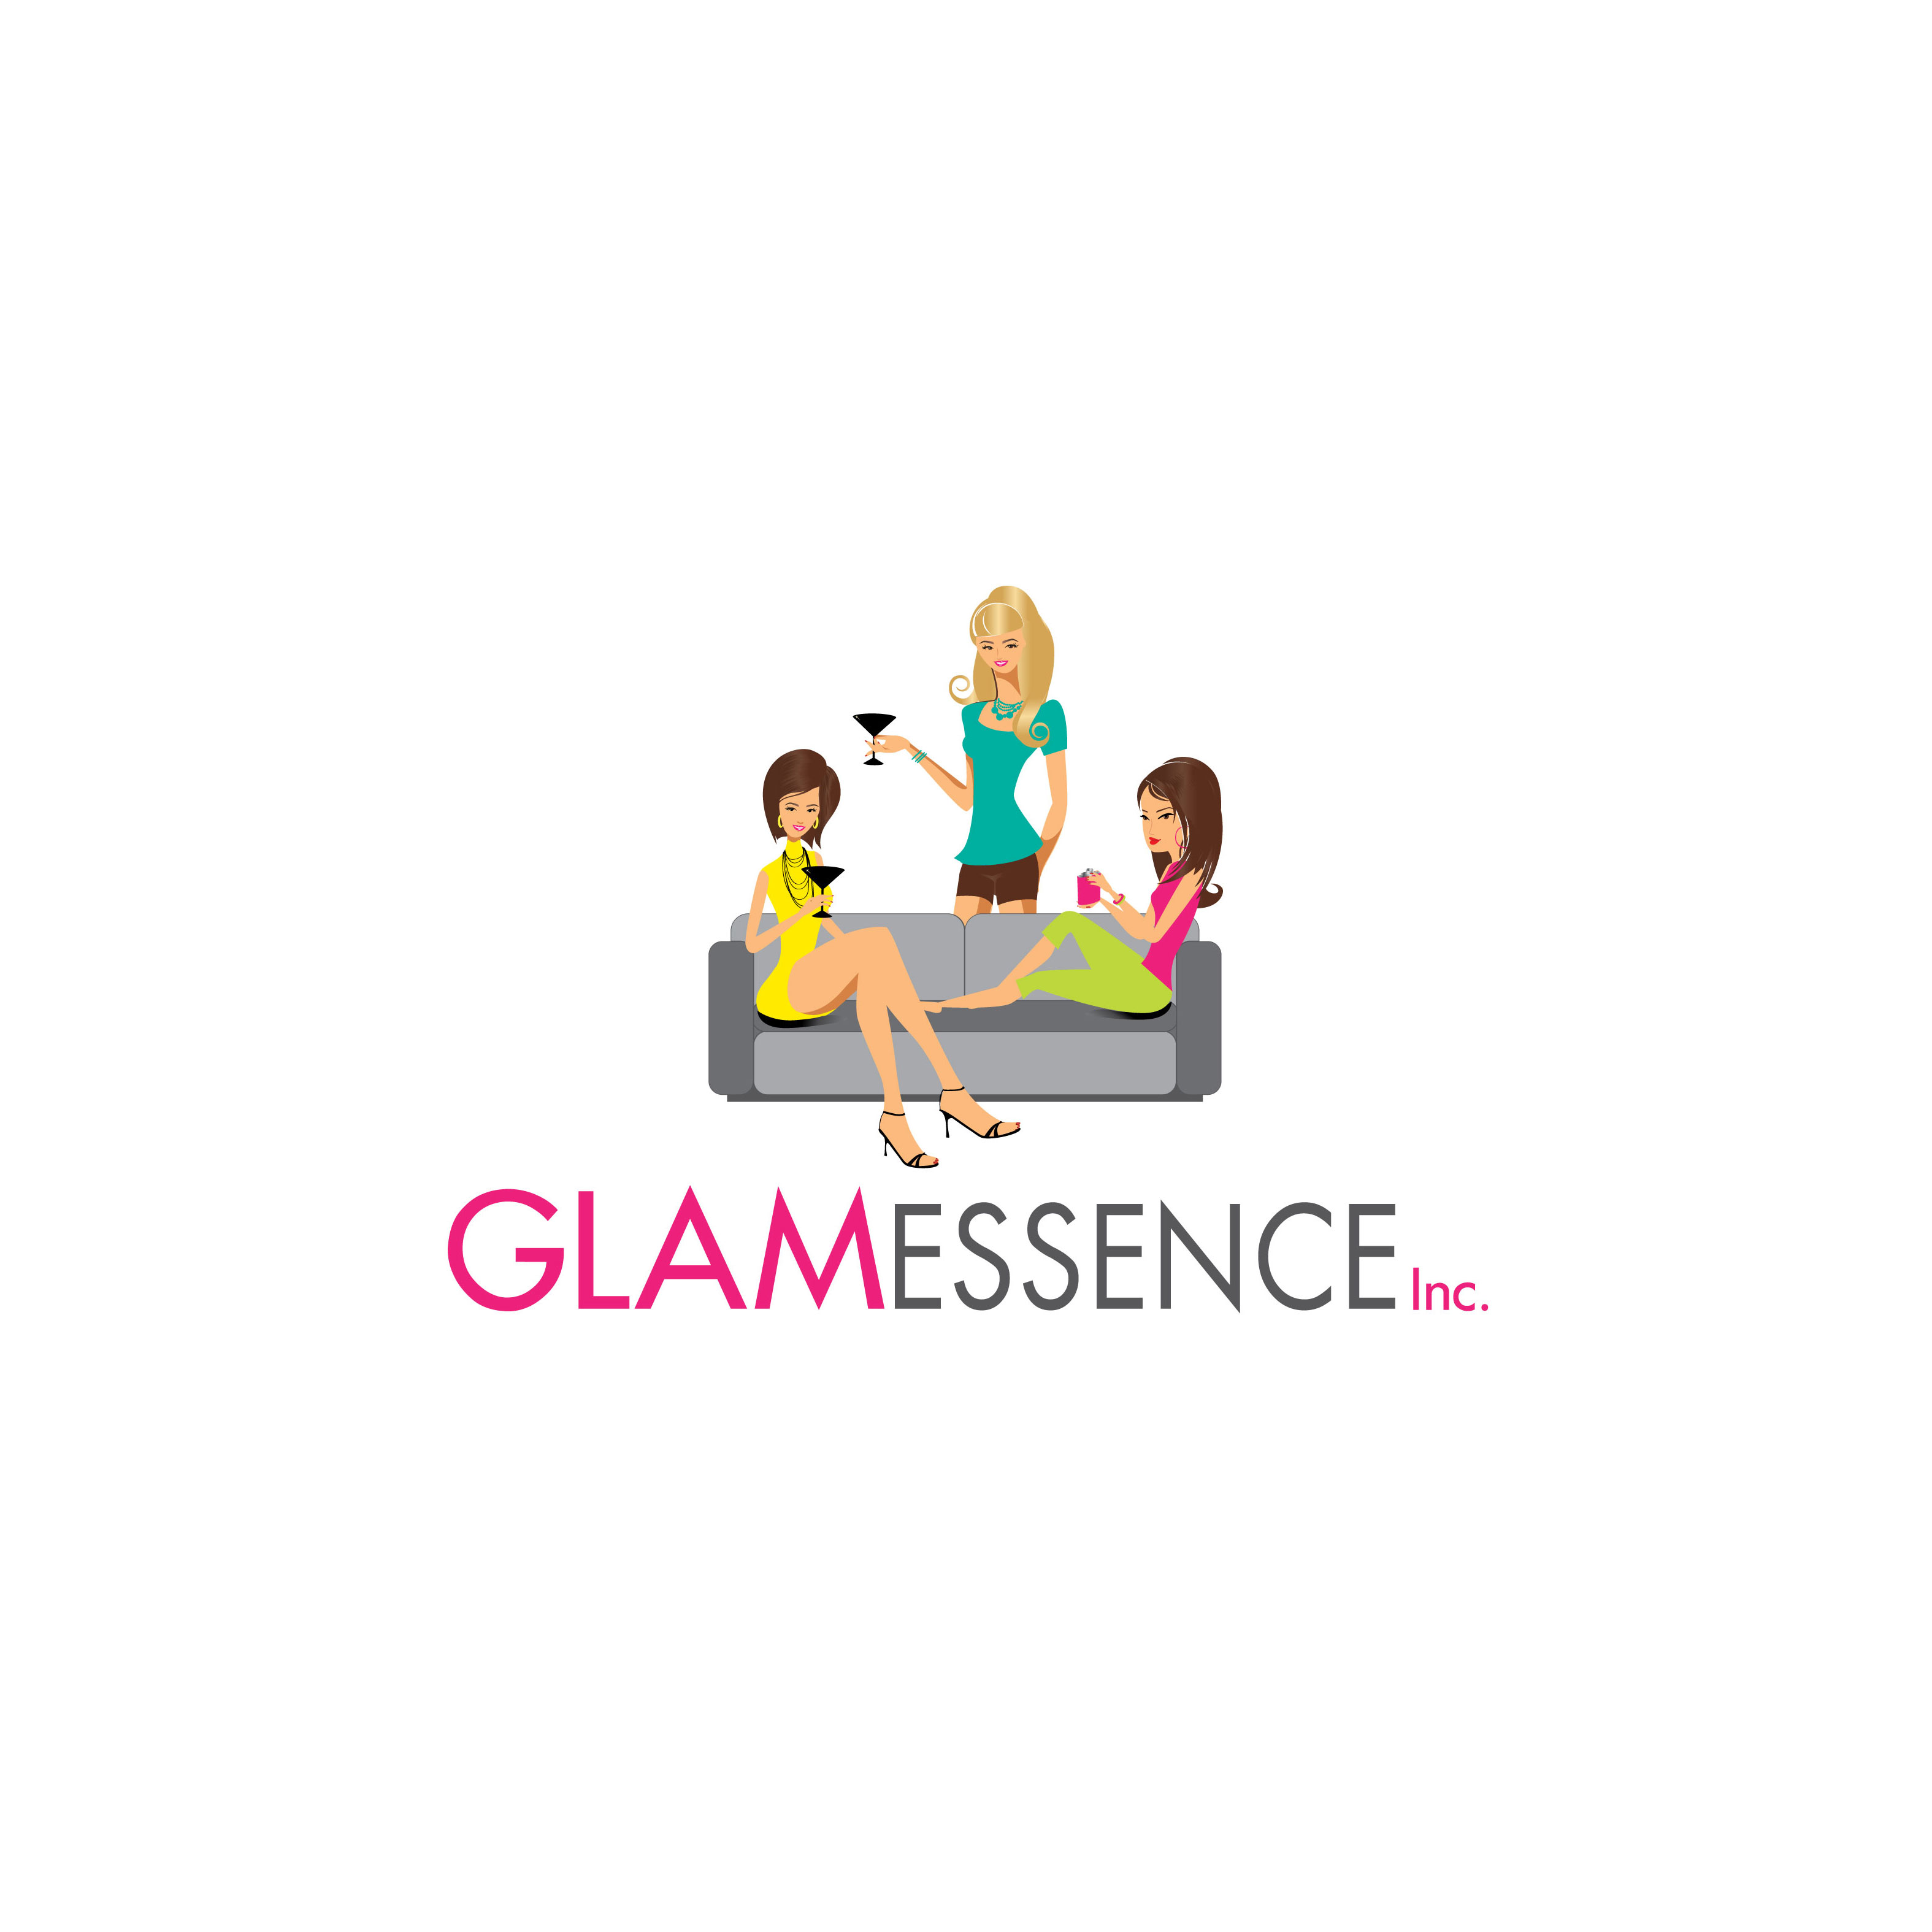 Unique caricature logo design for Glamessence Inc.